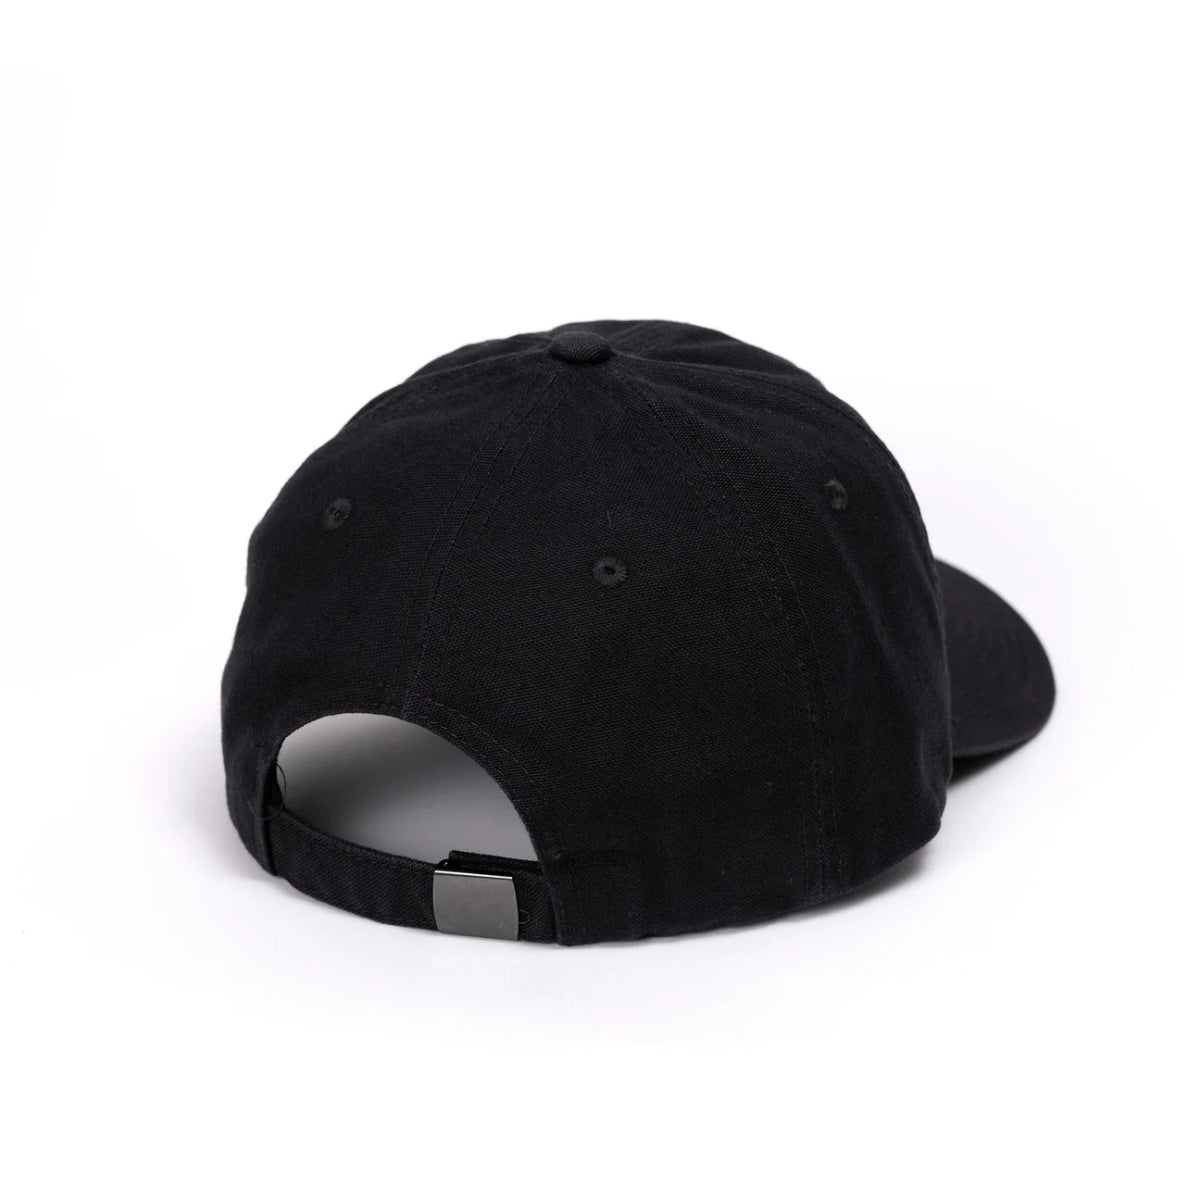 Nike SB Club Hat in Black/White - Goodnews Skateshop